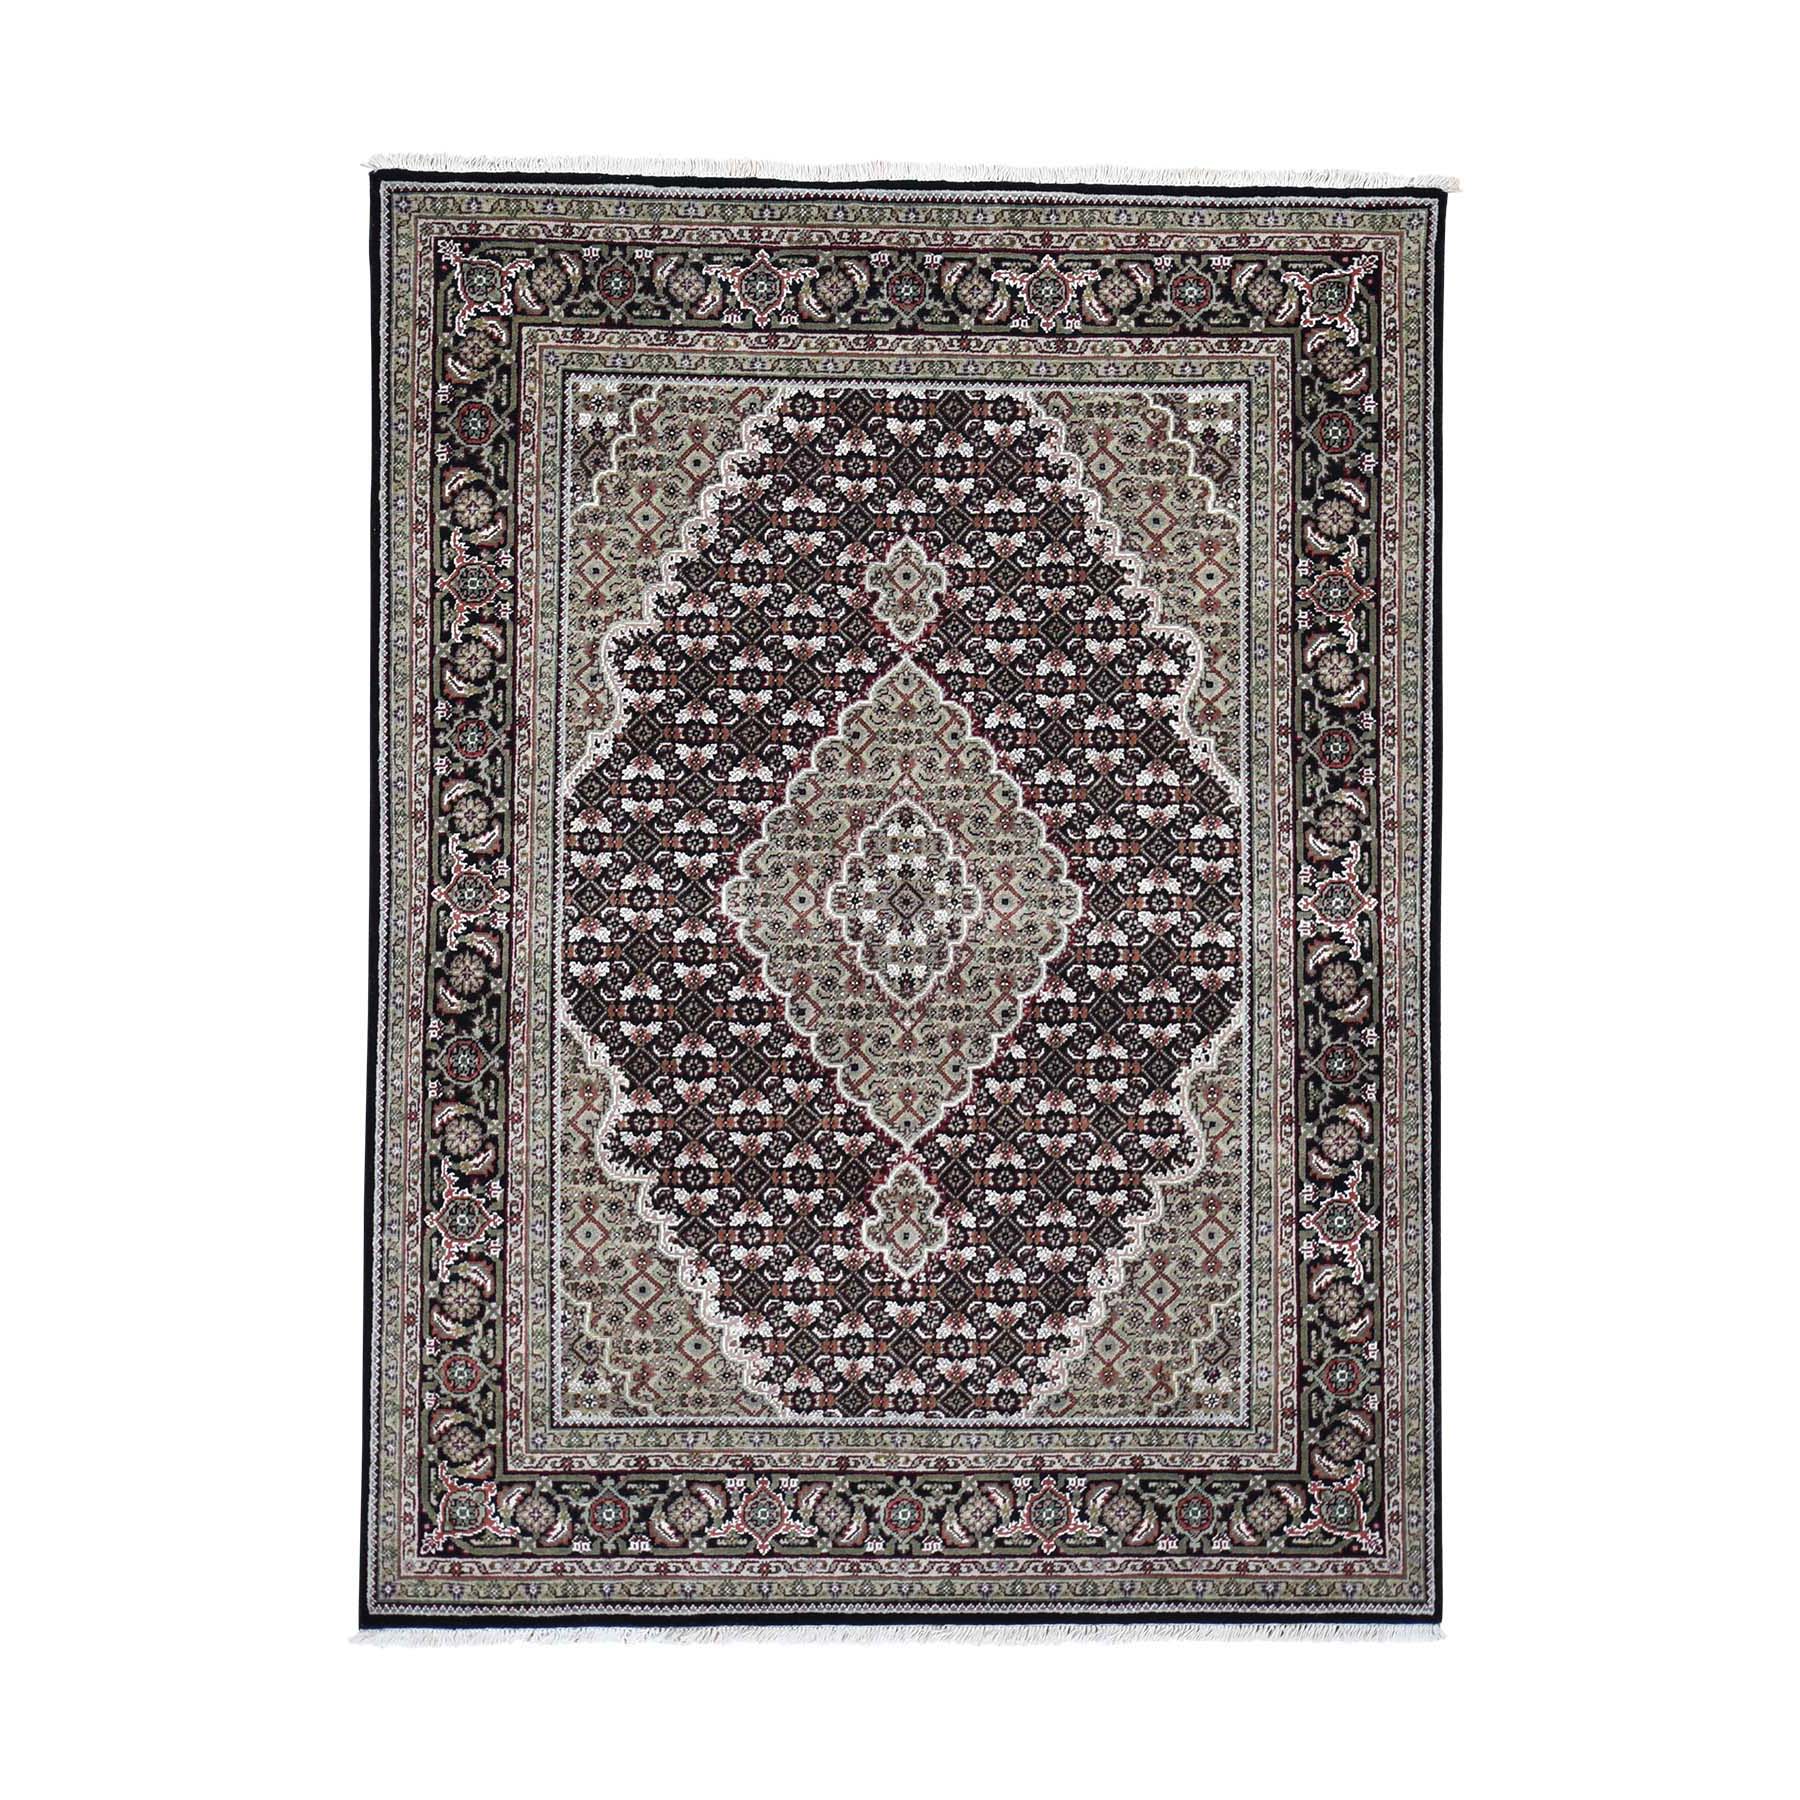 5'x6'8" Black Tabriz Mahi Wool and Silk Hand Woven Oriental Rug 